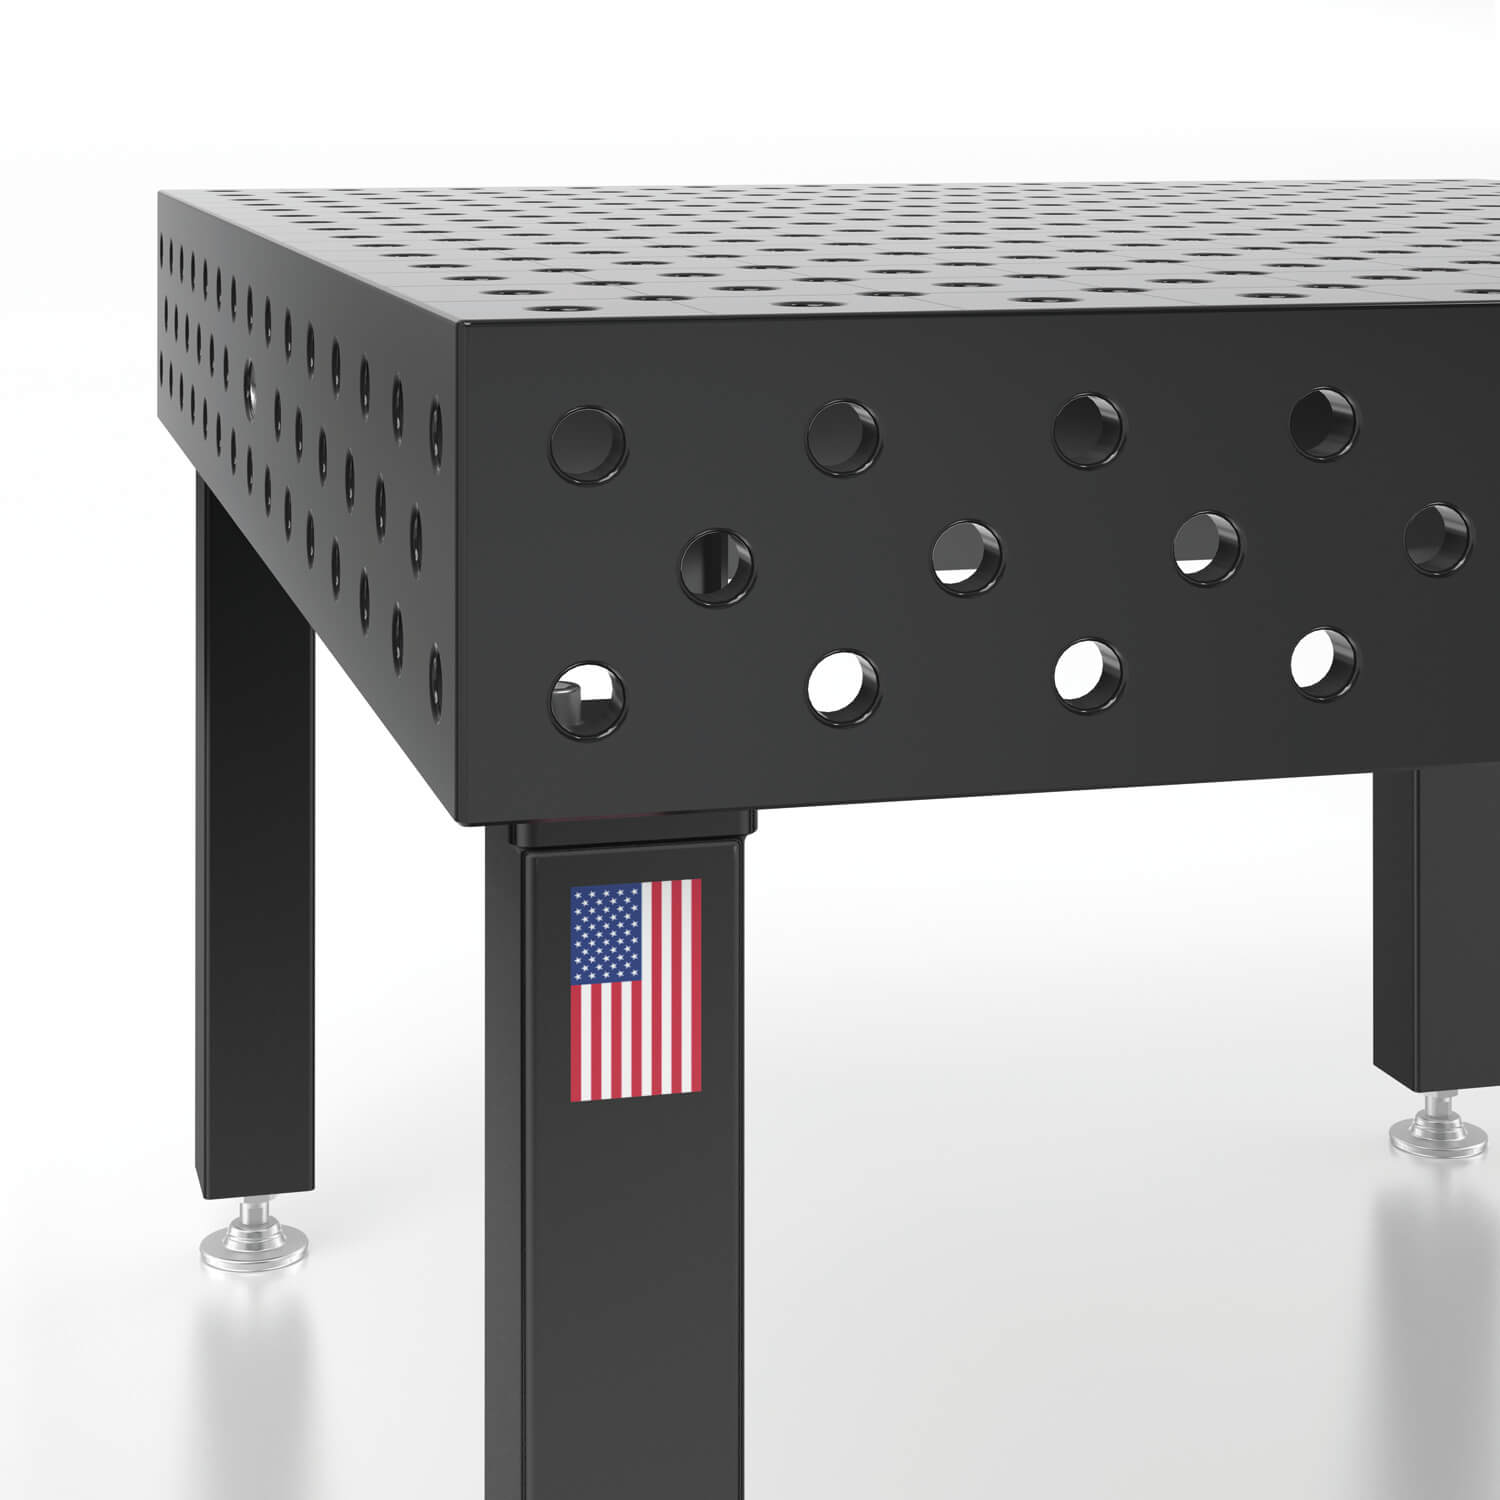 US280035.XD7: System 28 4'x5' (48"x60") Siegmund Imperial Series (Inch) Welding Table with Plasma Nitration